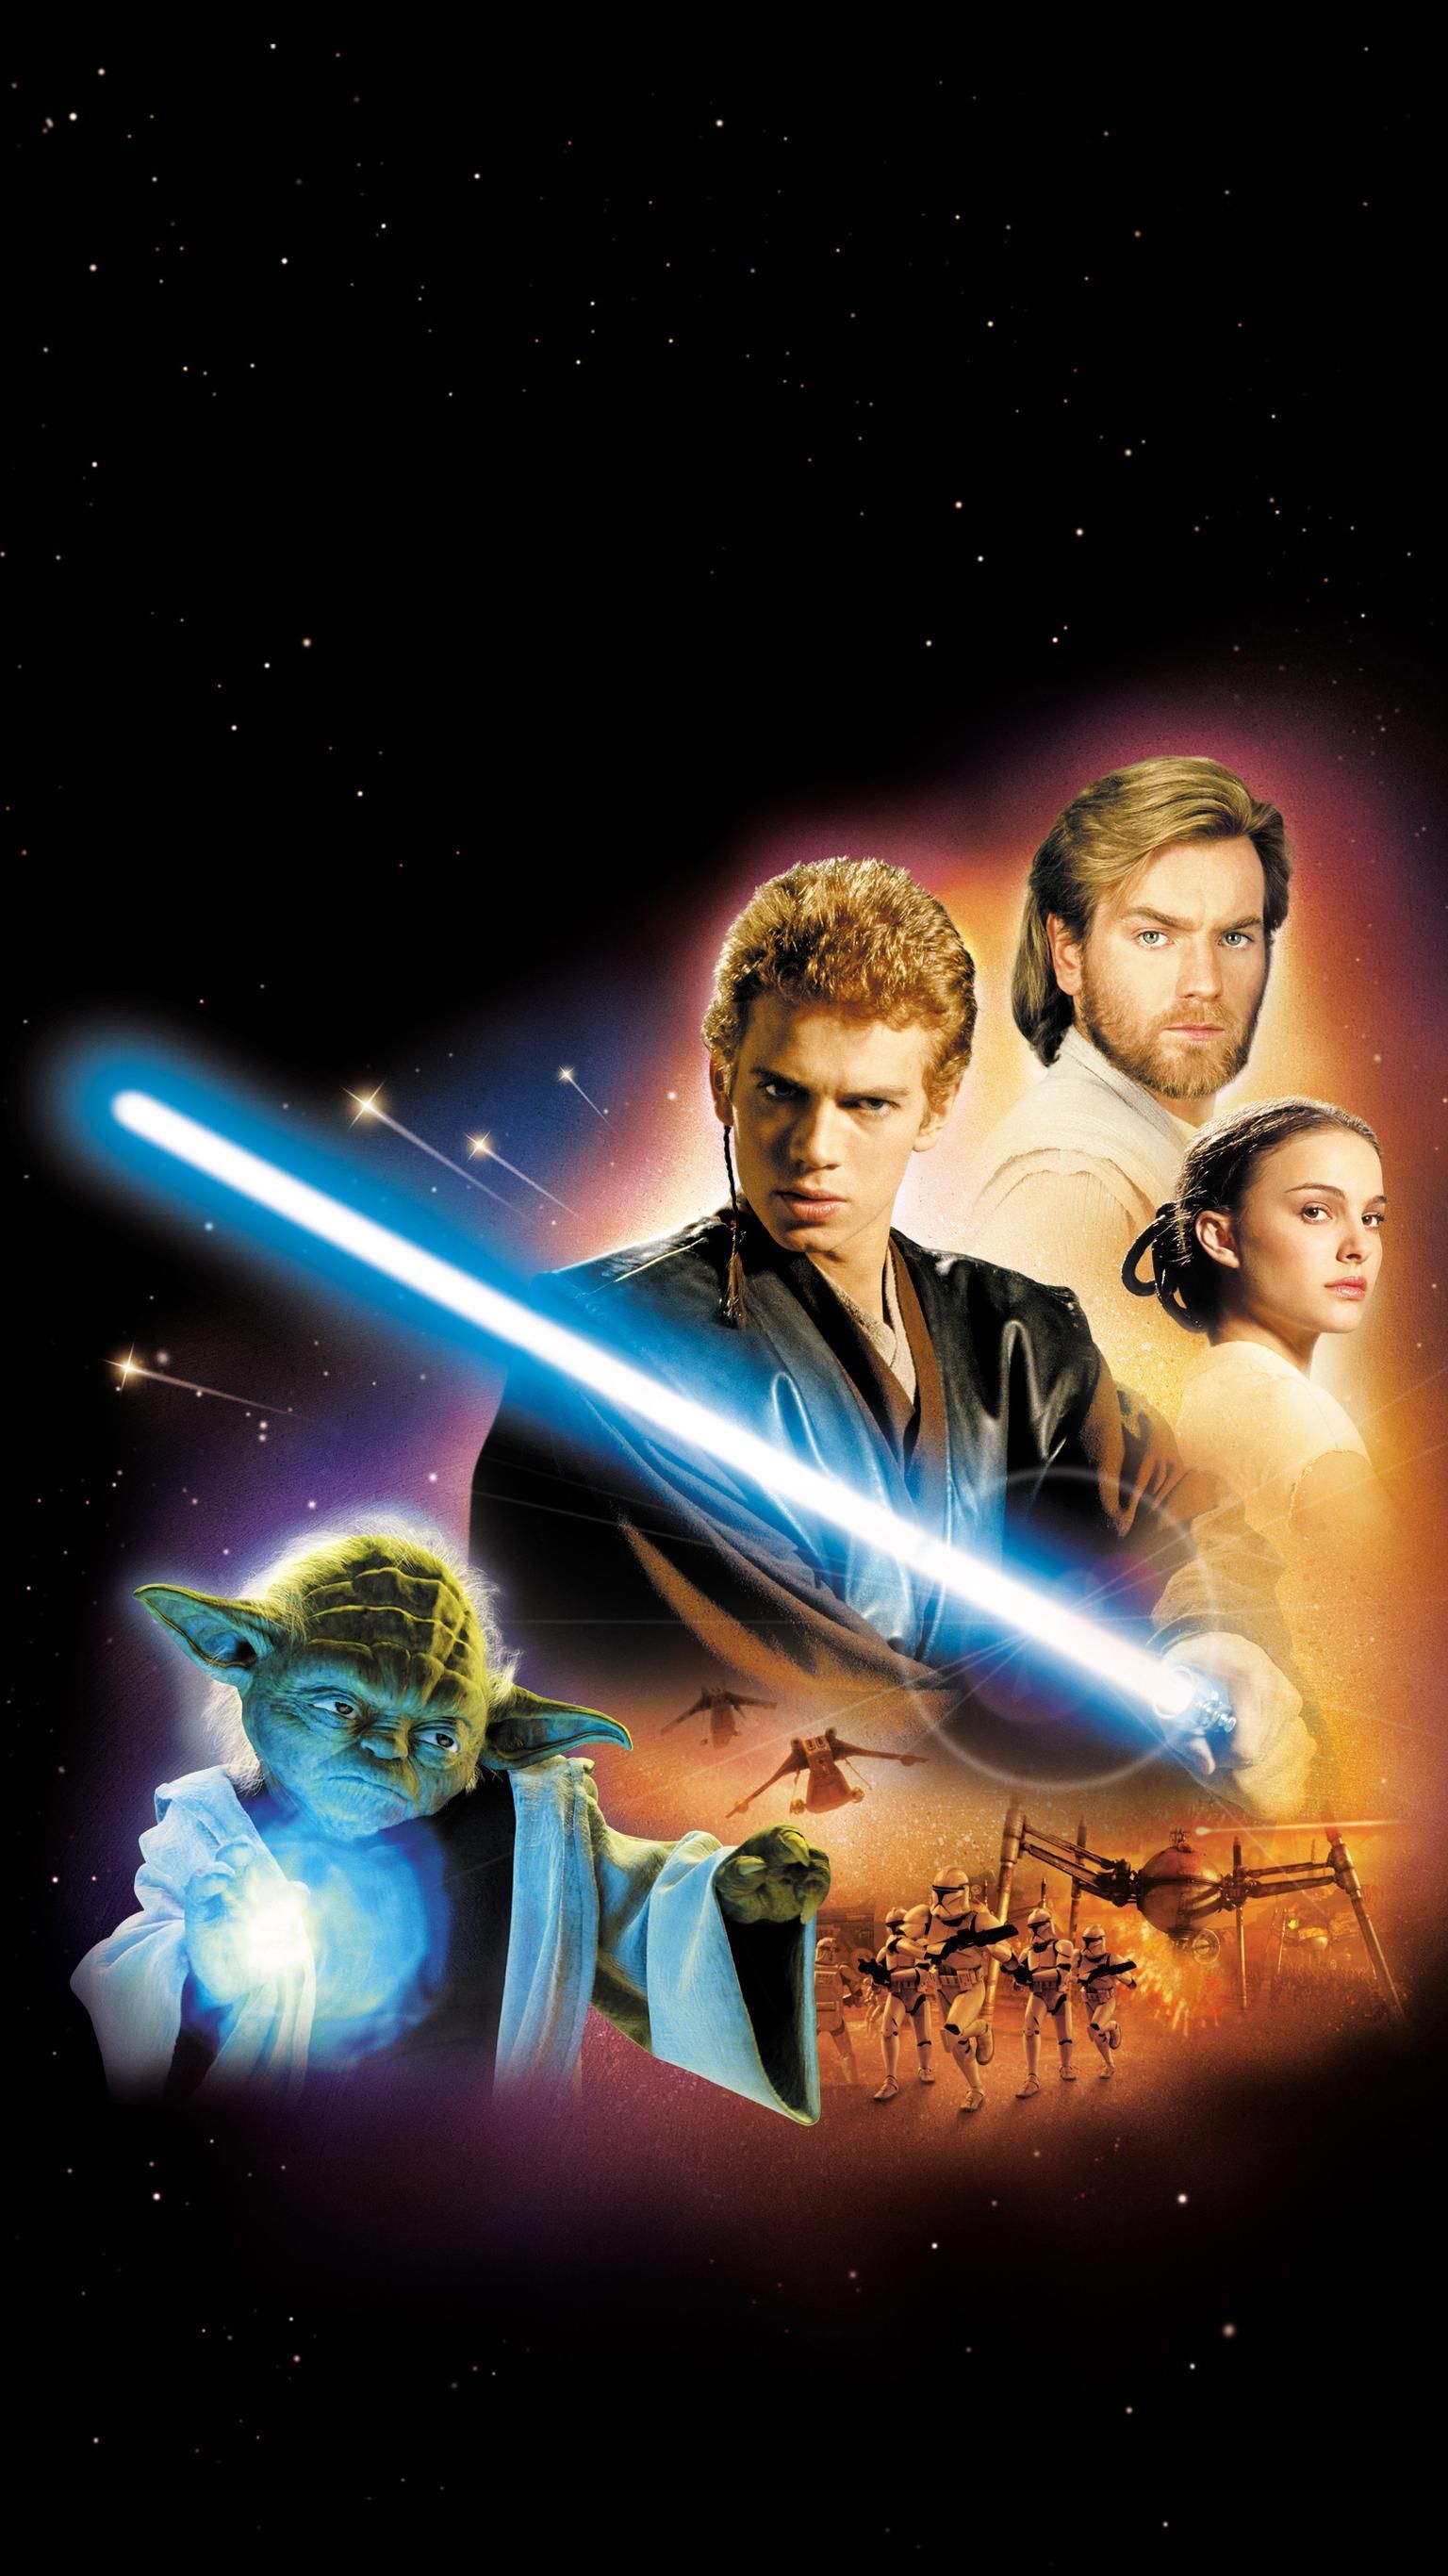 Star Wars: Episode II of the Clones (2002) Phone Wallpaper. Moviemania. Star wars episode ii, Star wars wallpaper, Star wars poster